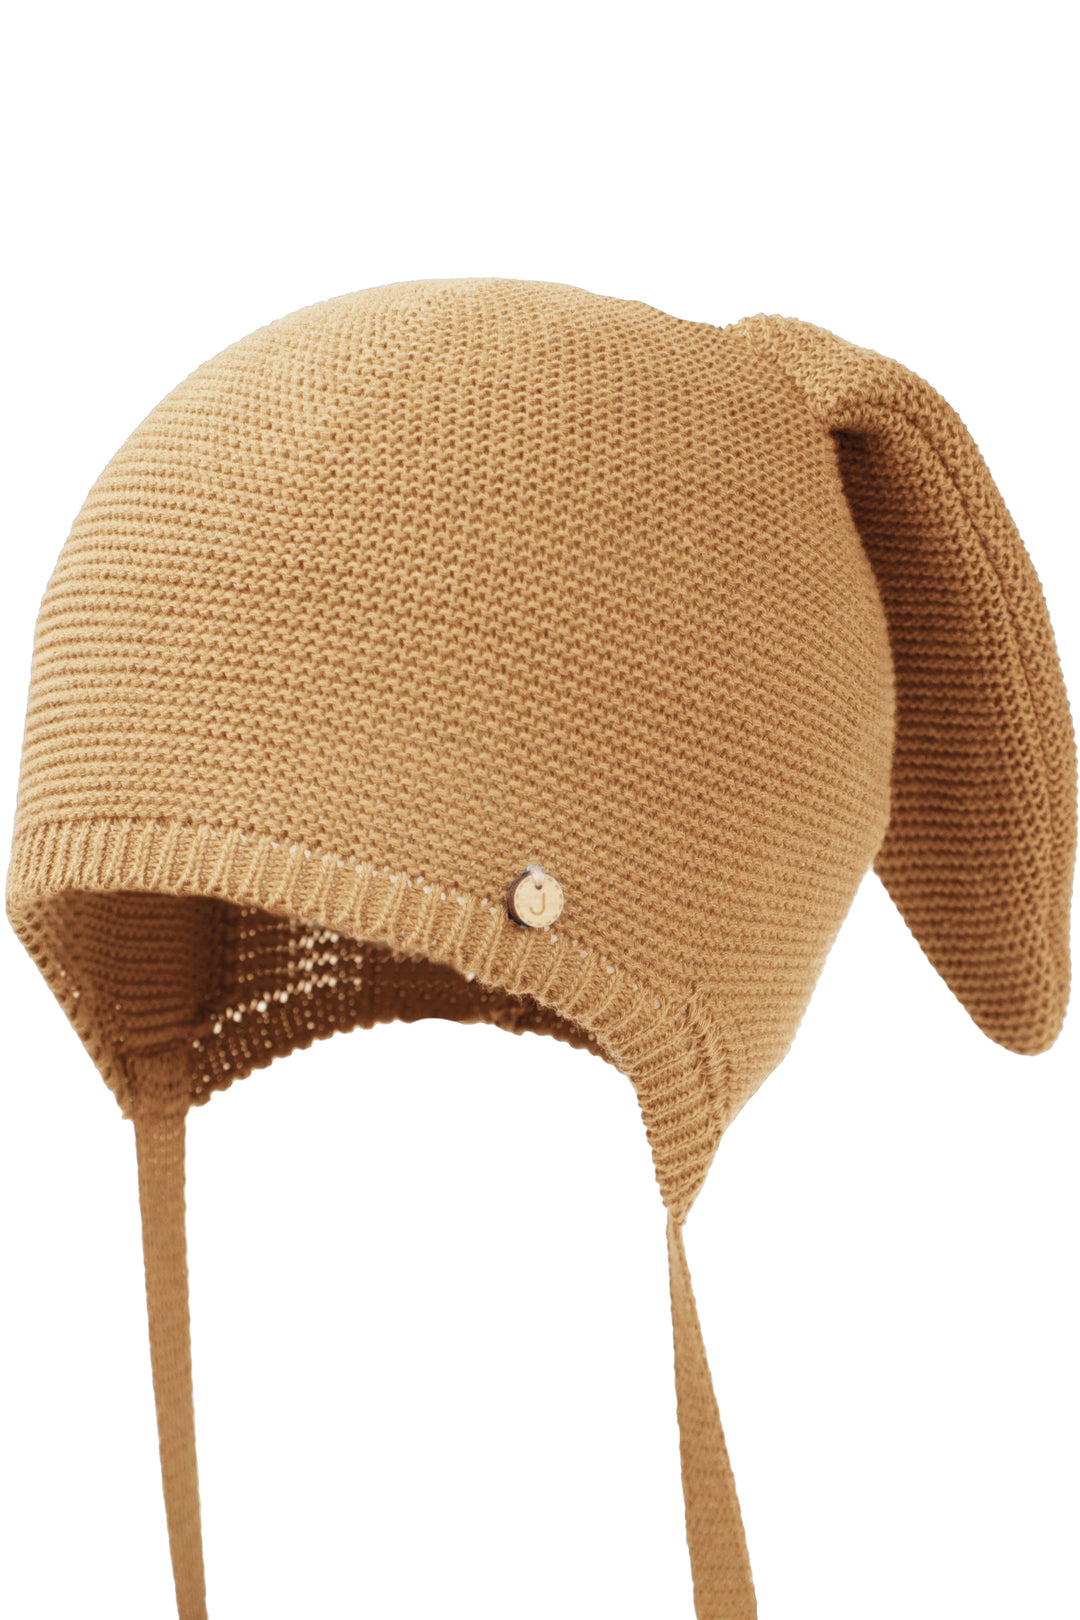 Jamiks "Bugs" Caramel Knit Bunny Hat | Millie and John